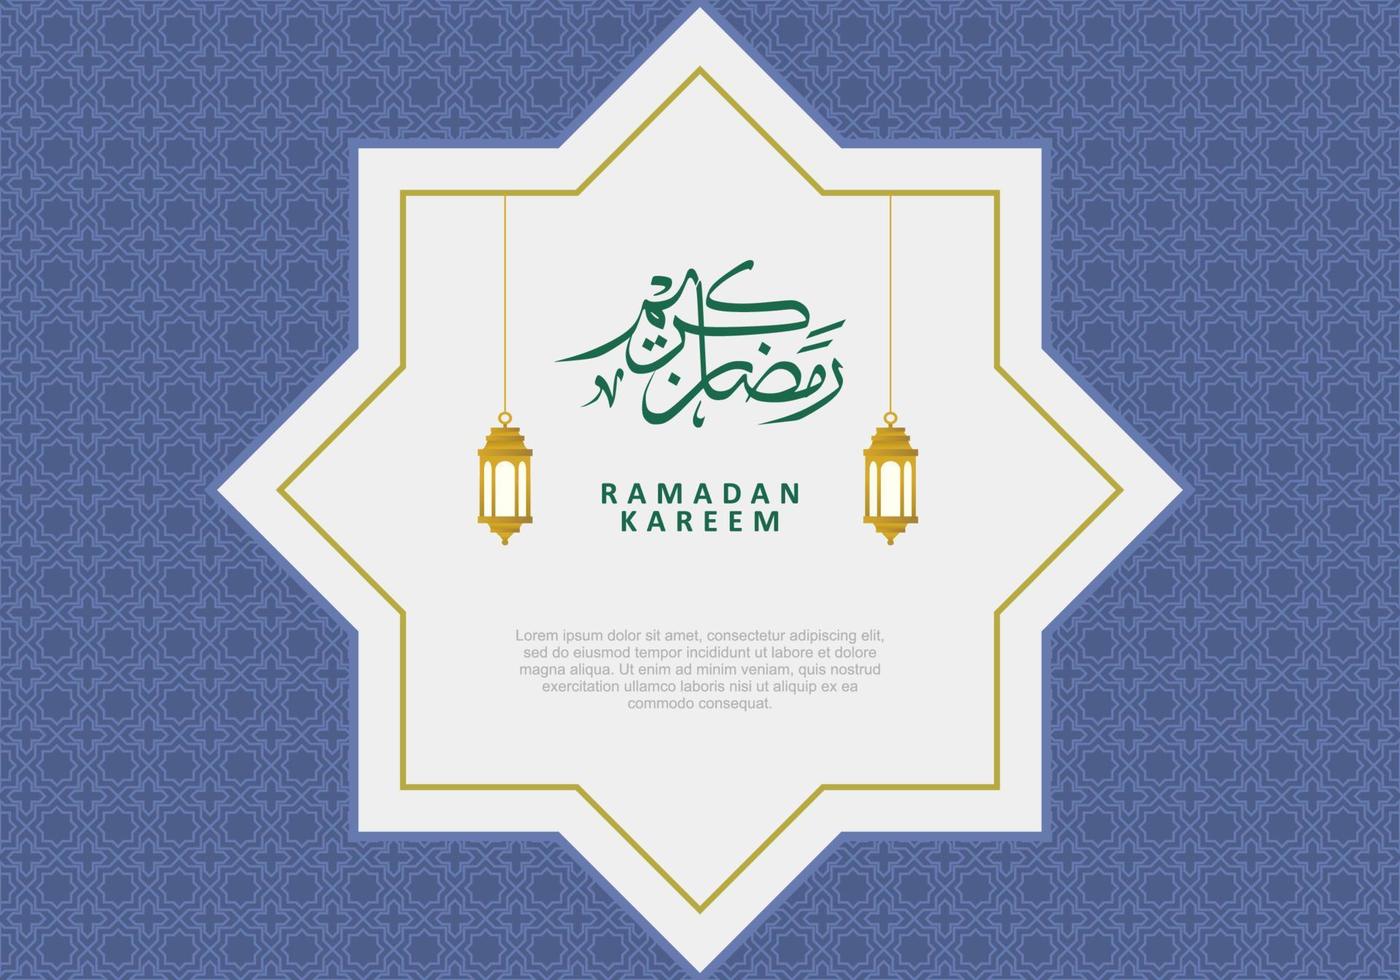 Ramadan kareem islamic greeting with islamic ornament arab calligraphy vector